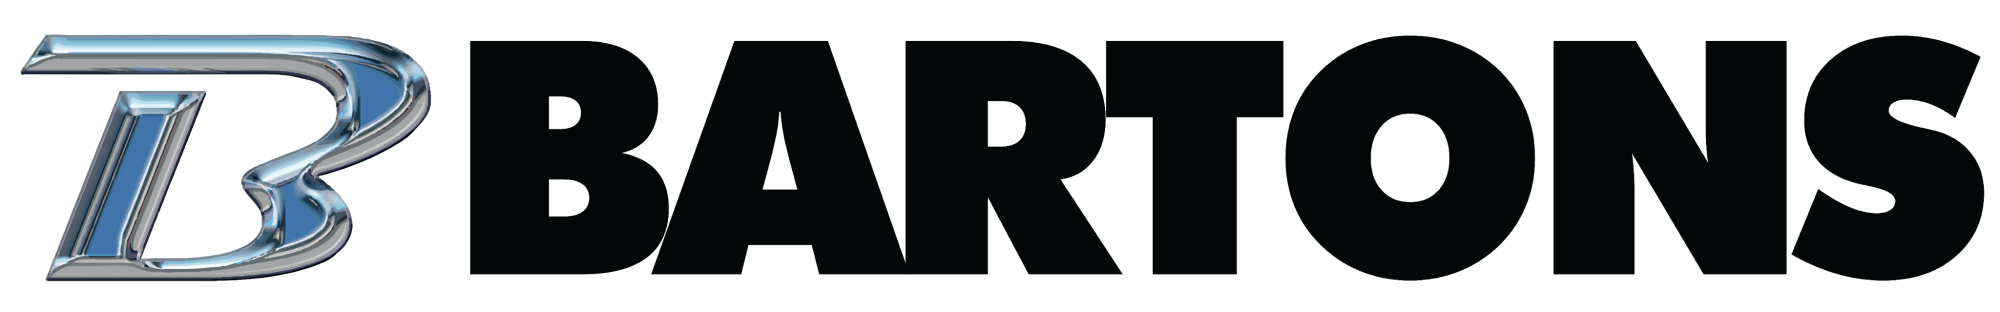 Bartons logo